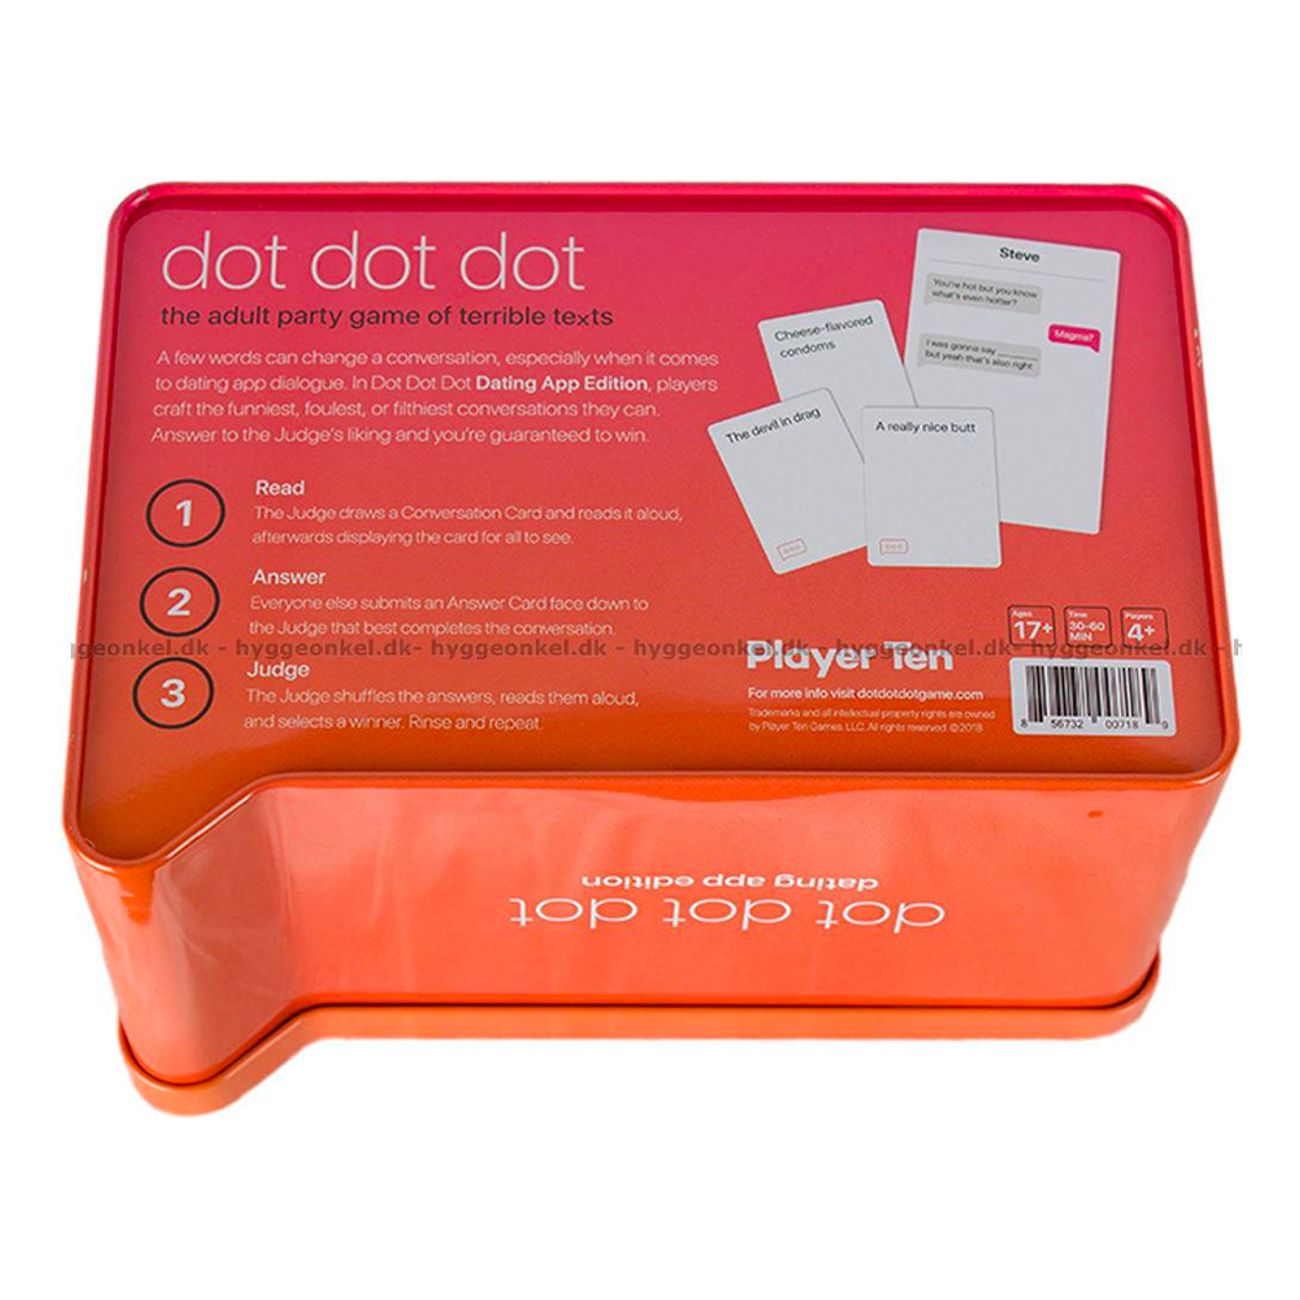 dot-dot-dot-dating-app-edition-spel-81301-1